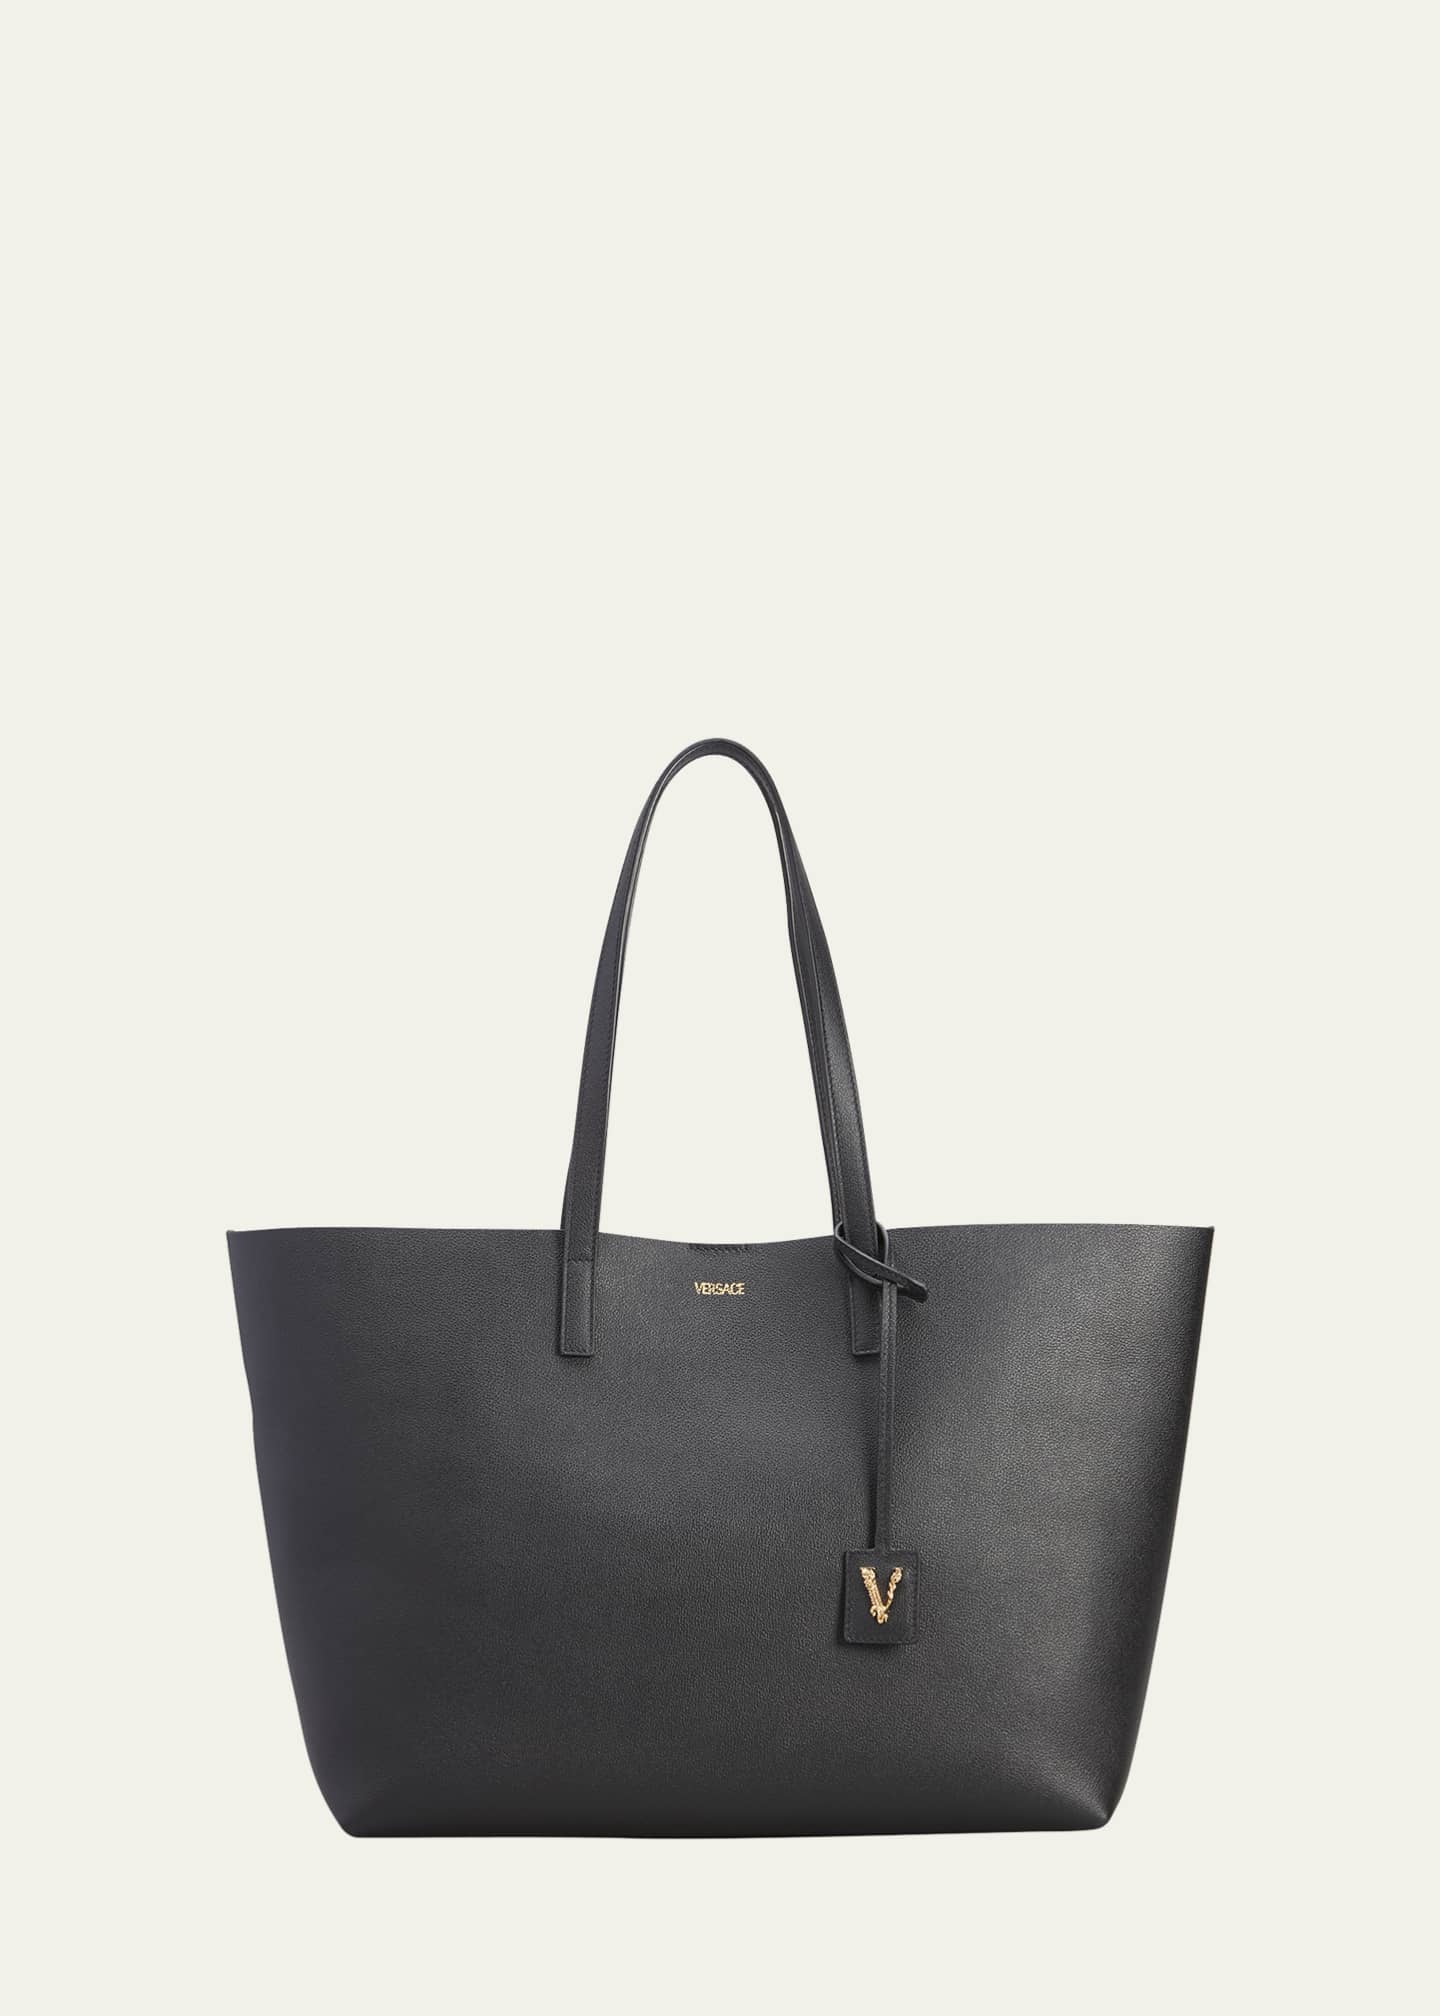 Versace Virtus  Women handbags, New handbags, Handbag